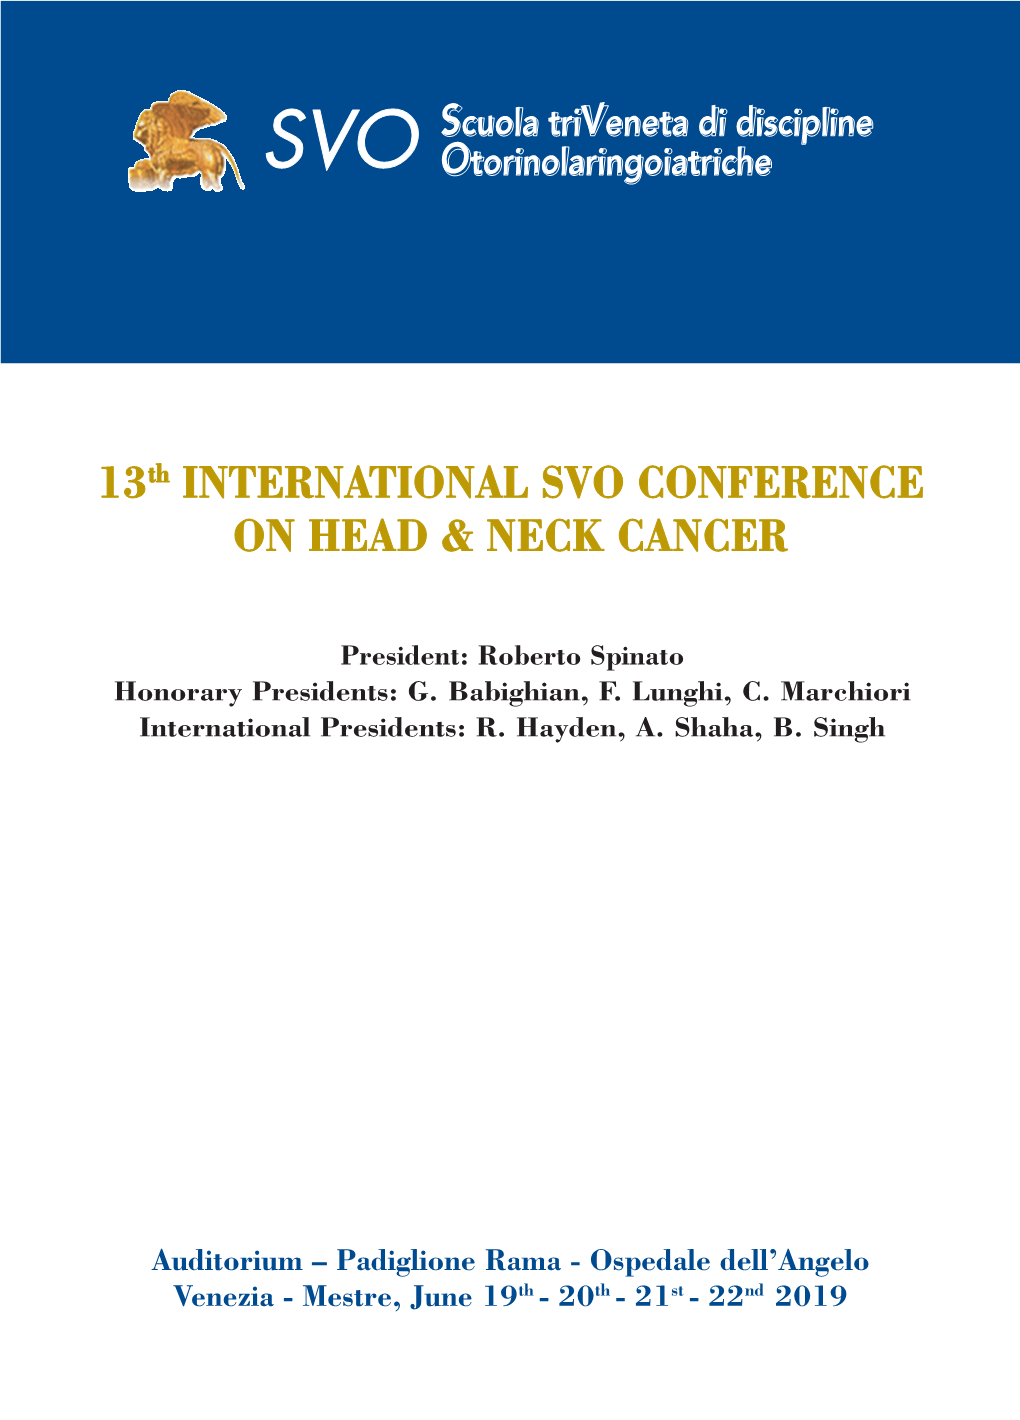 13Th INTERNATIONAL SVO CONFERENCE on HEAD & NECK